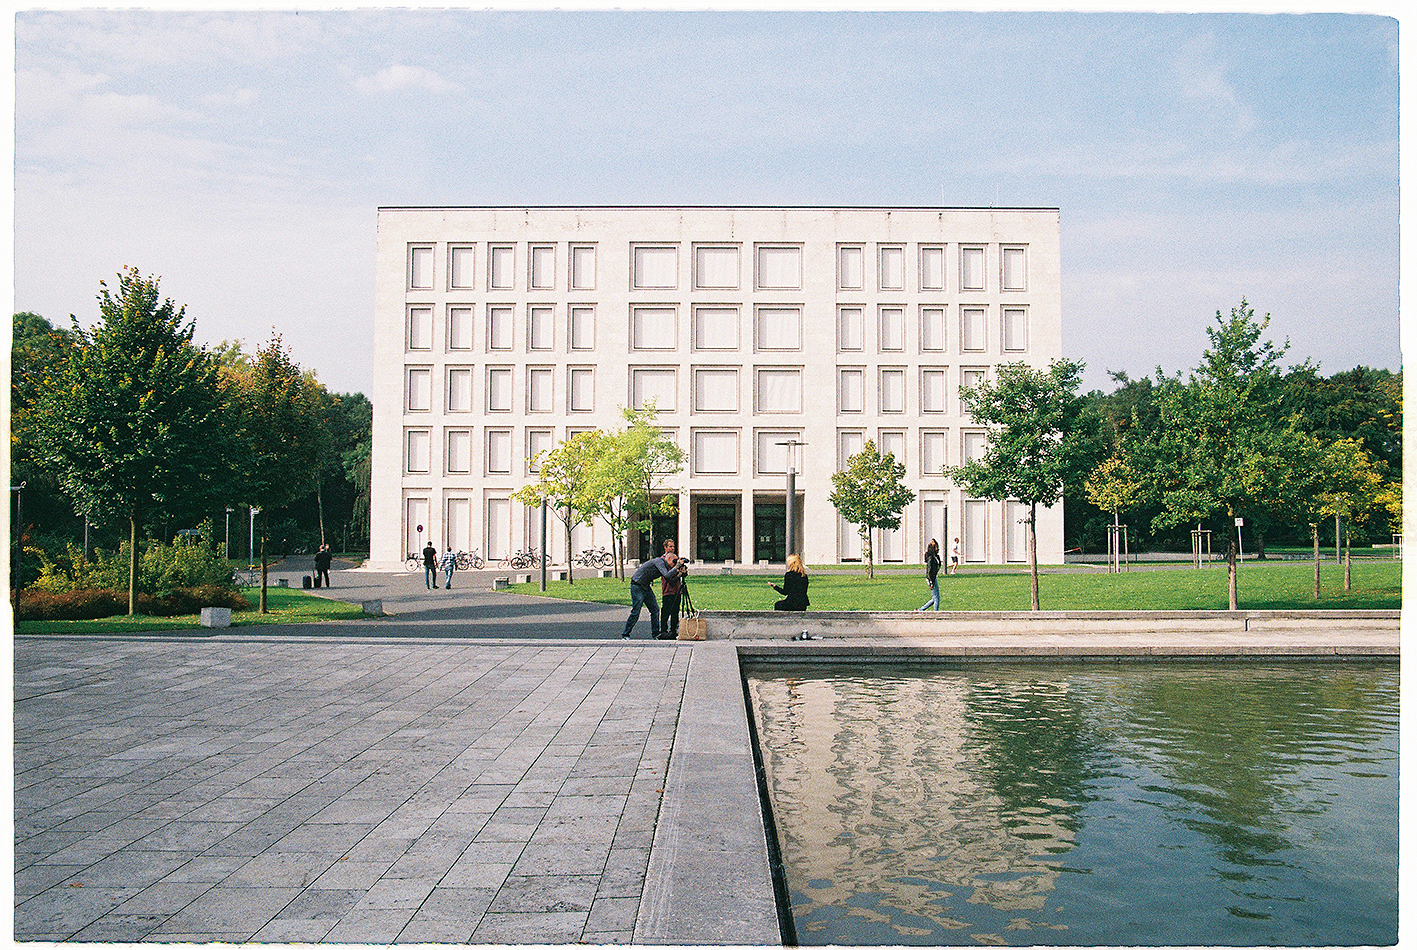 Areál s pôvodnou centrálou neslávne známeho koncernu I. G. Farben dnes poskytuje vzdelanie v jedinečných budovách Goetheho univerzity vysúťažených najmä berlínskymi architektmi. (Foto: Marek Peťovský)